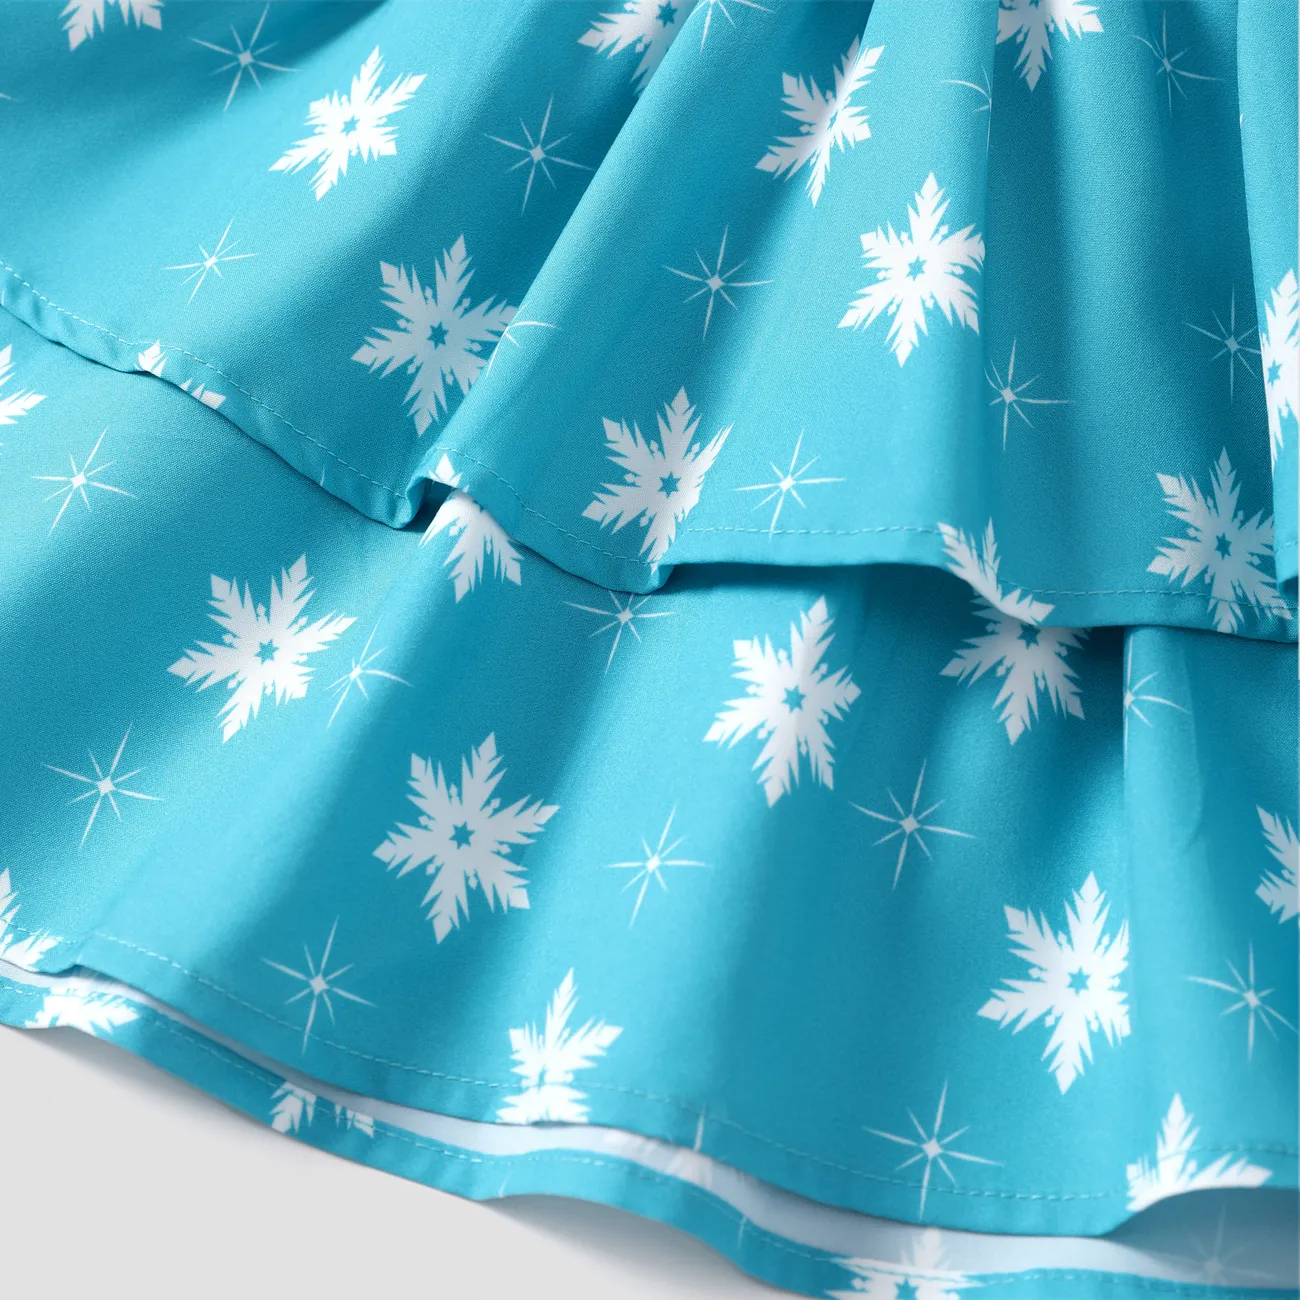 Disney Frozen Elsa 2pcs Toddler Girls Naia™ Character cake Skirt Suit Set
 Aqua Green big image 1